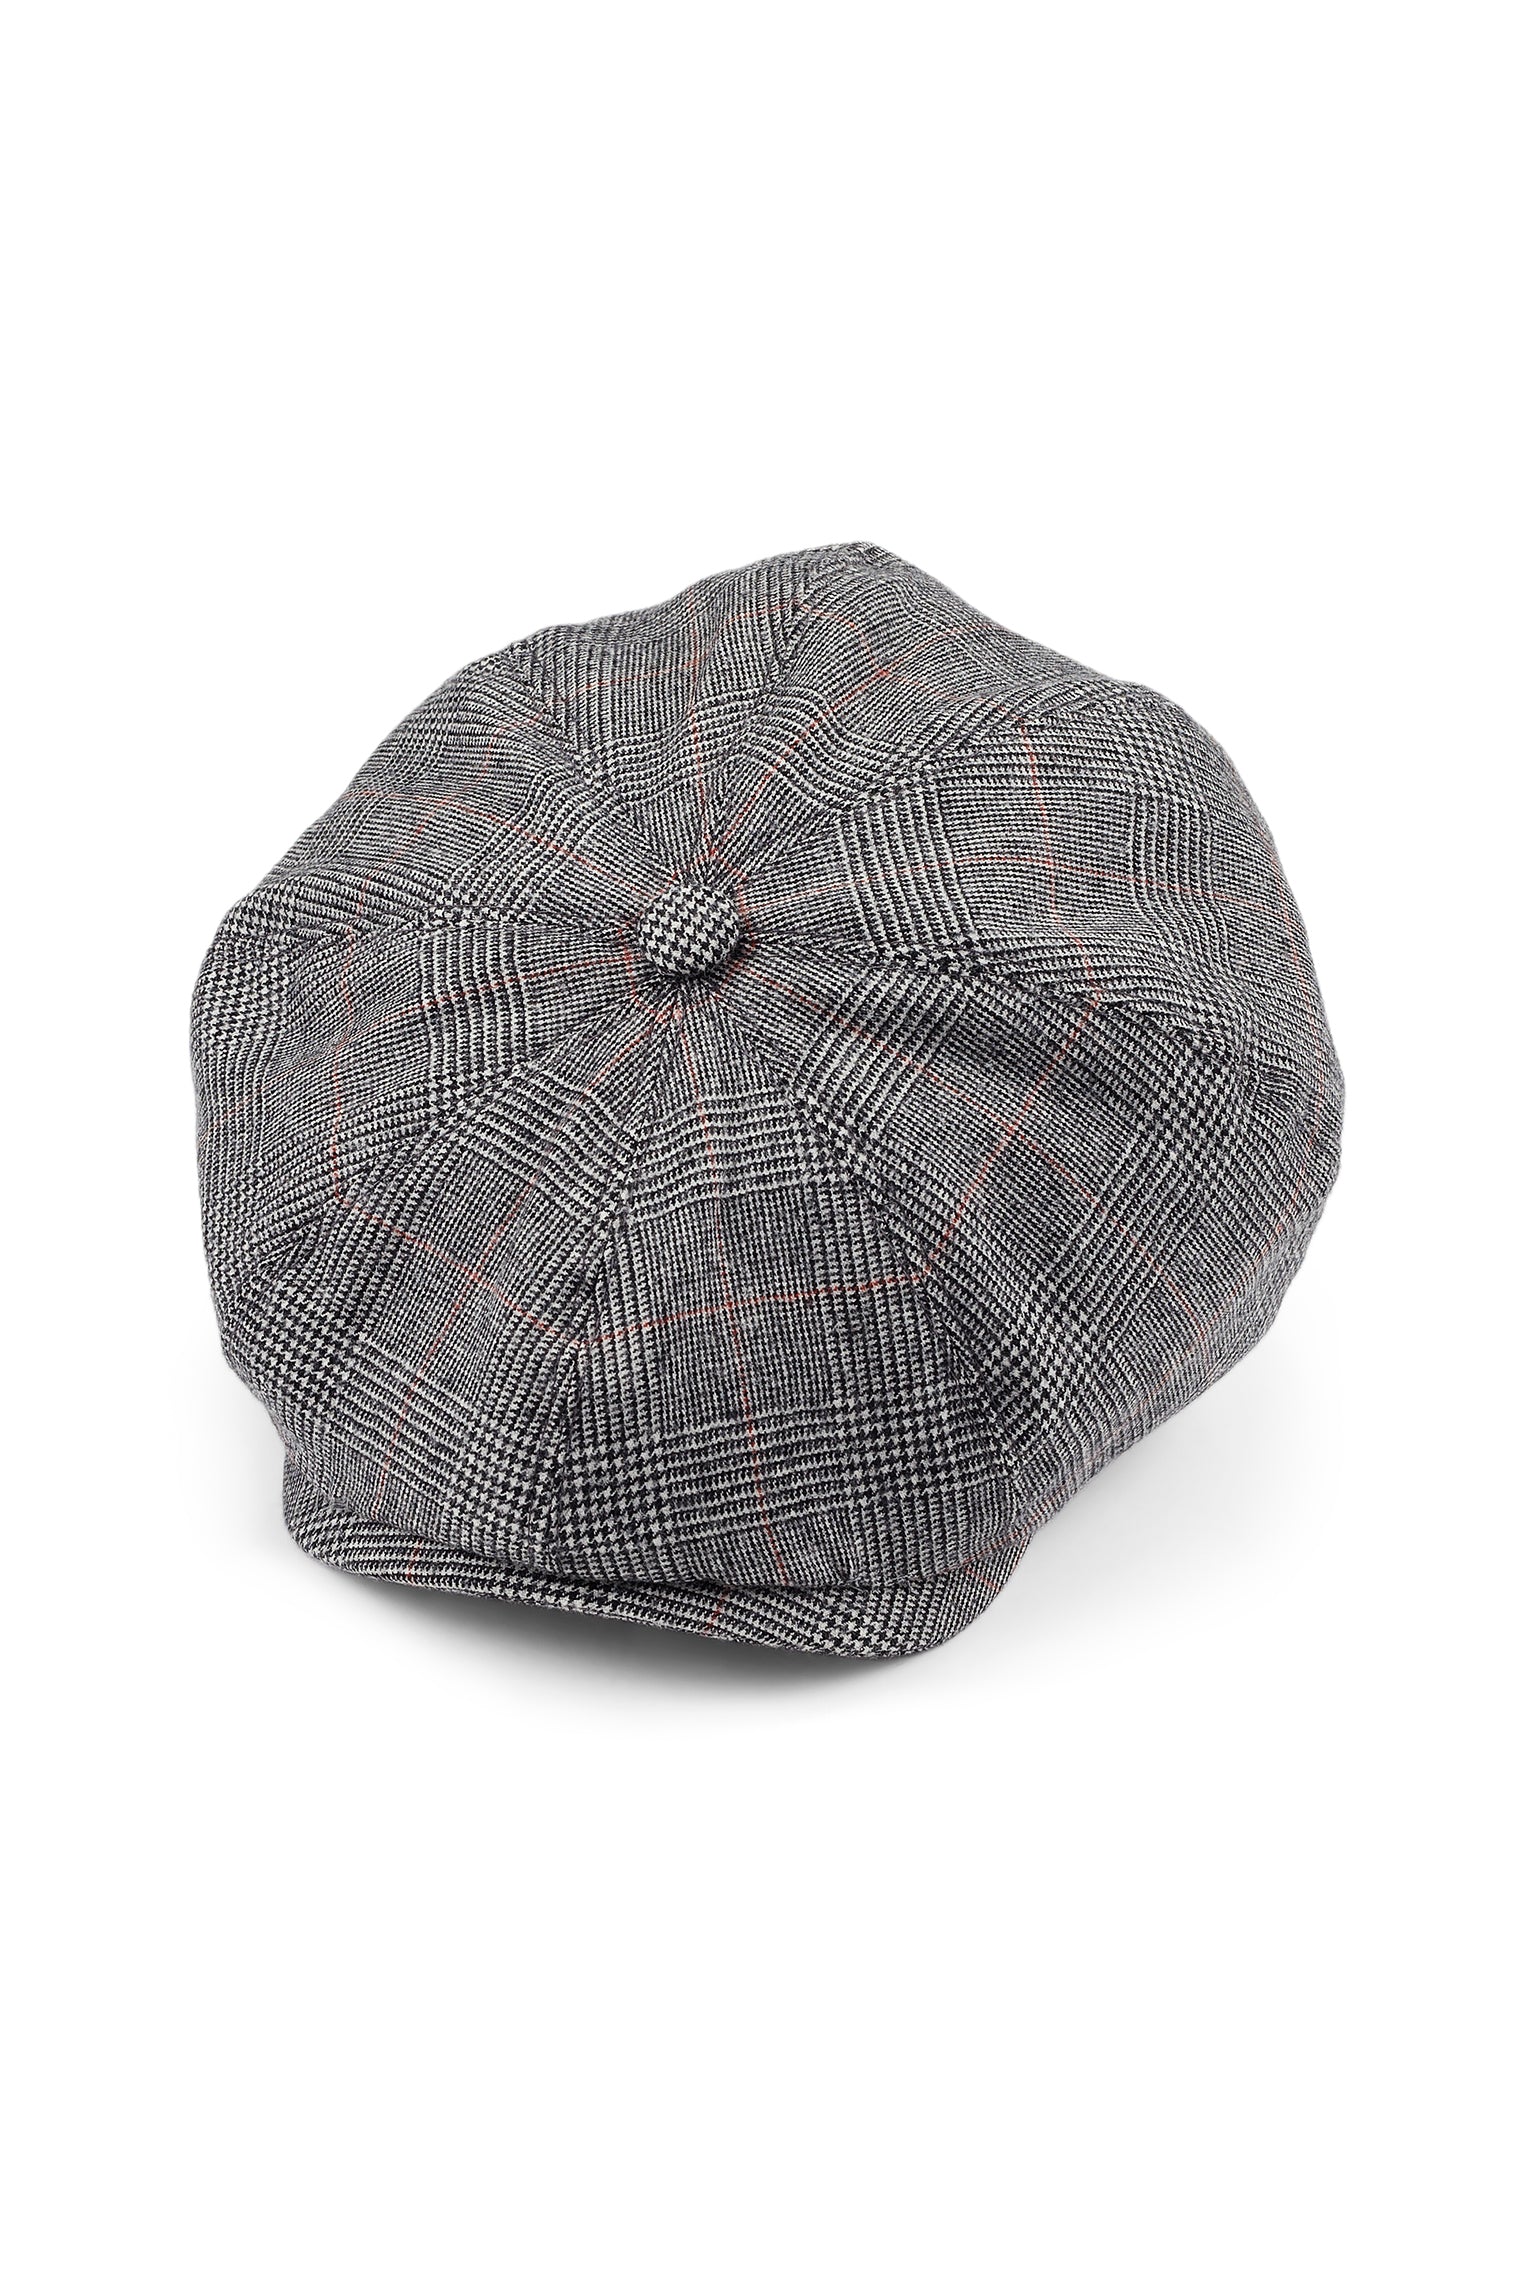 Highgrove Grey Bakerboy Cap - Men's Hats - Lock & Co. Hatters London UK